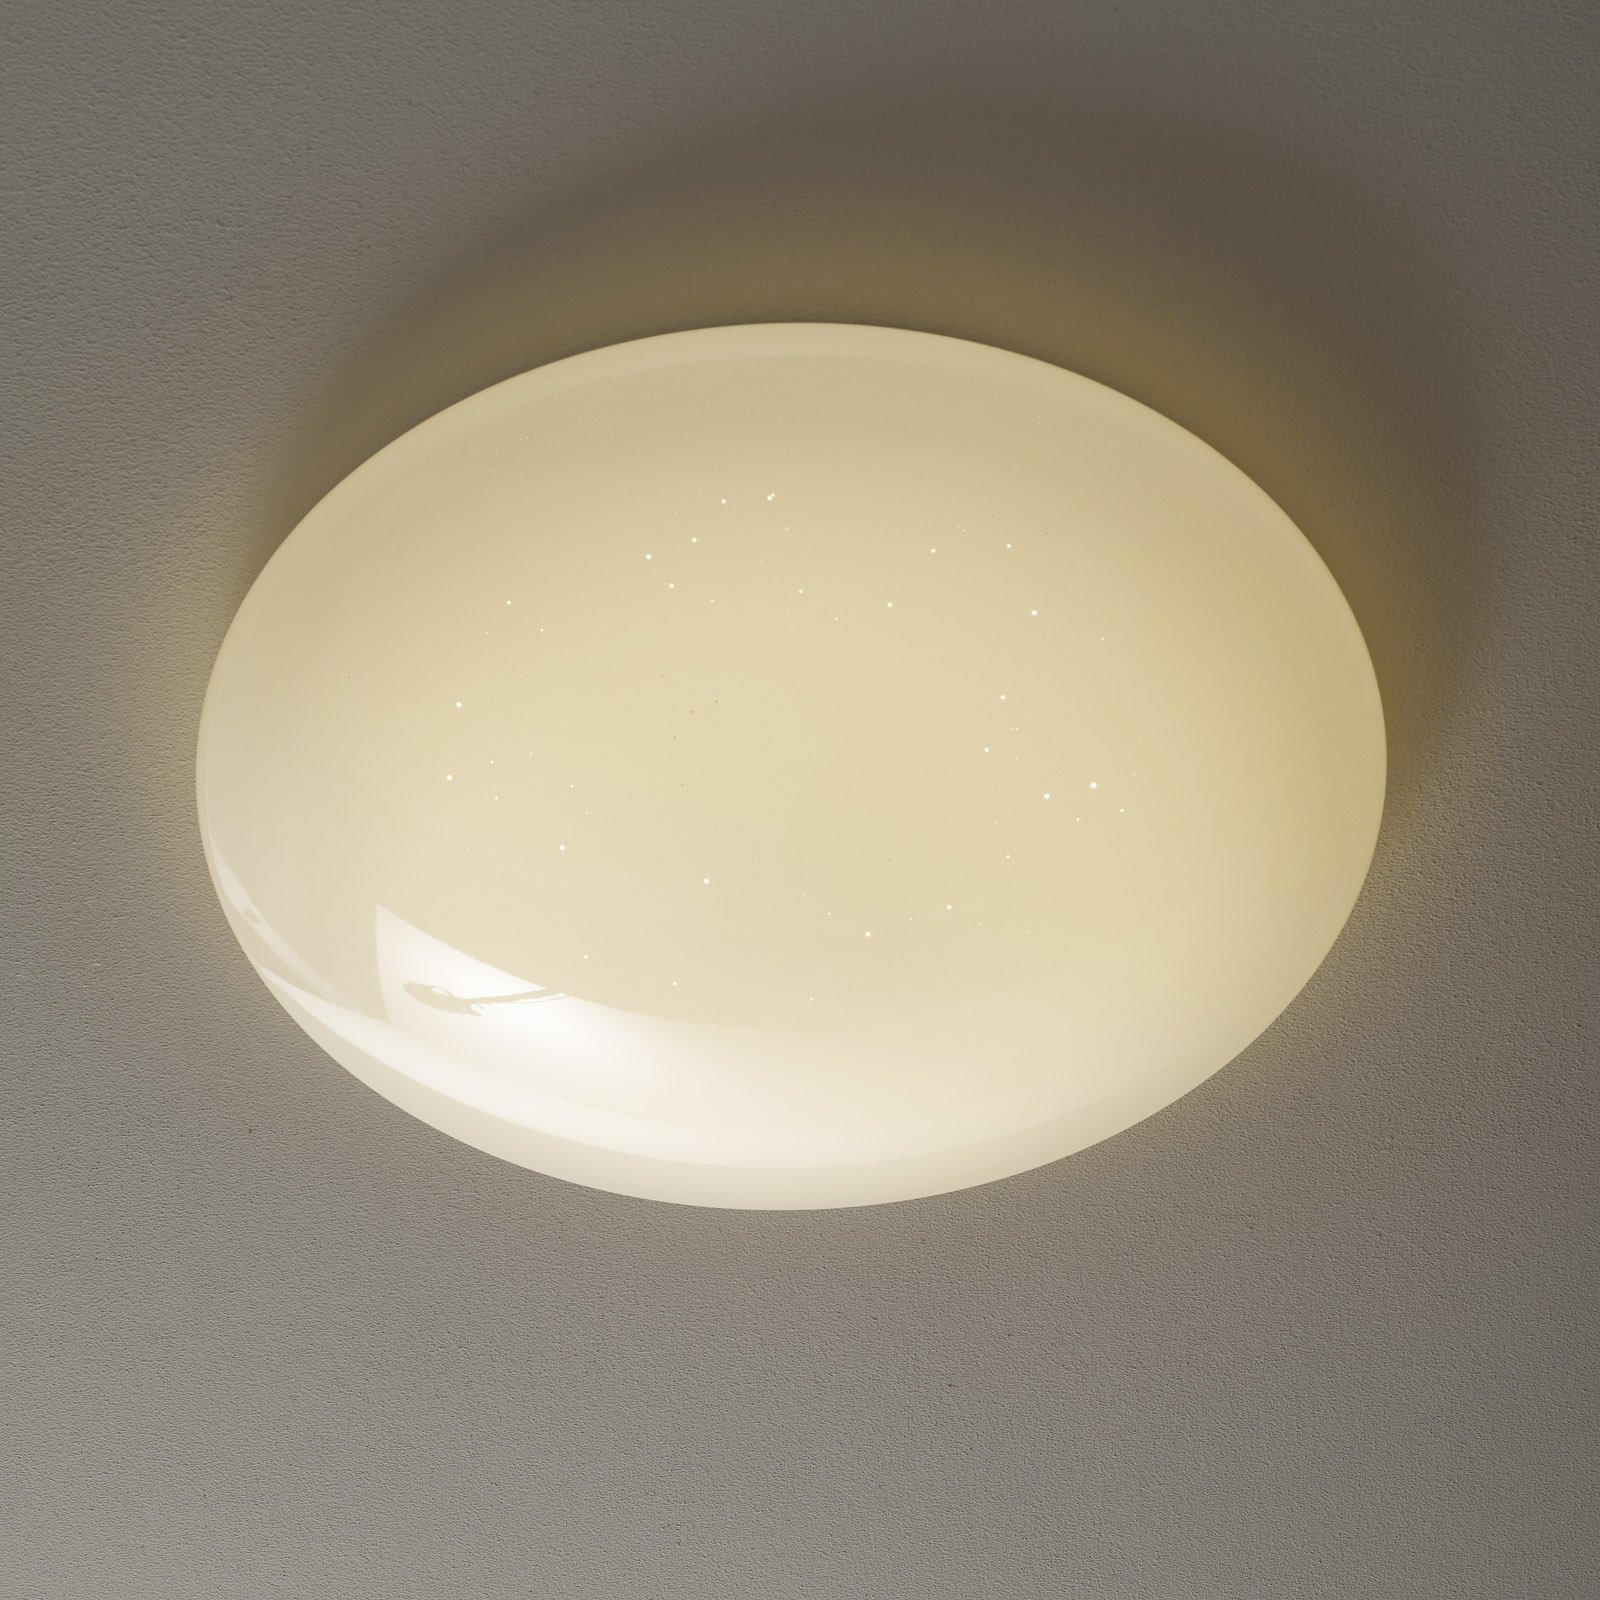 EGLO Totari-C LED stropní světlo Kristall RGB